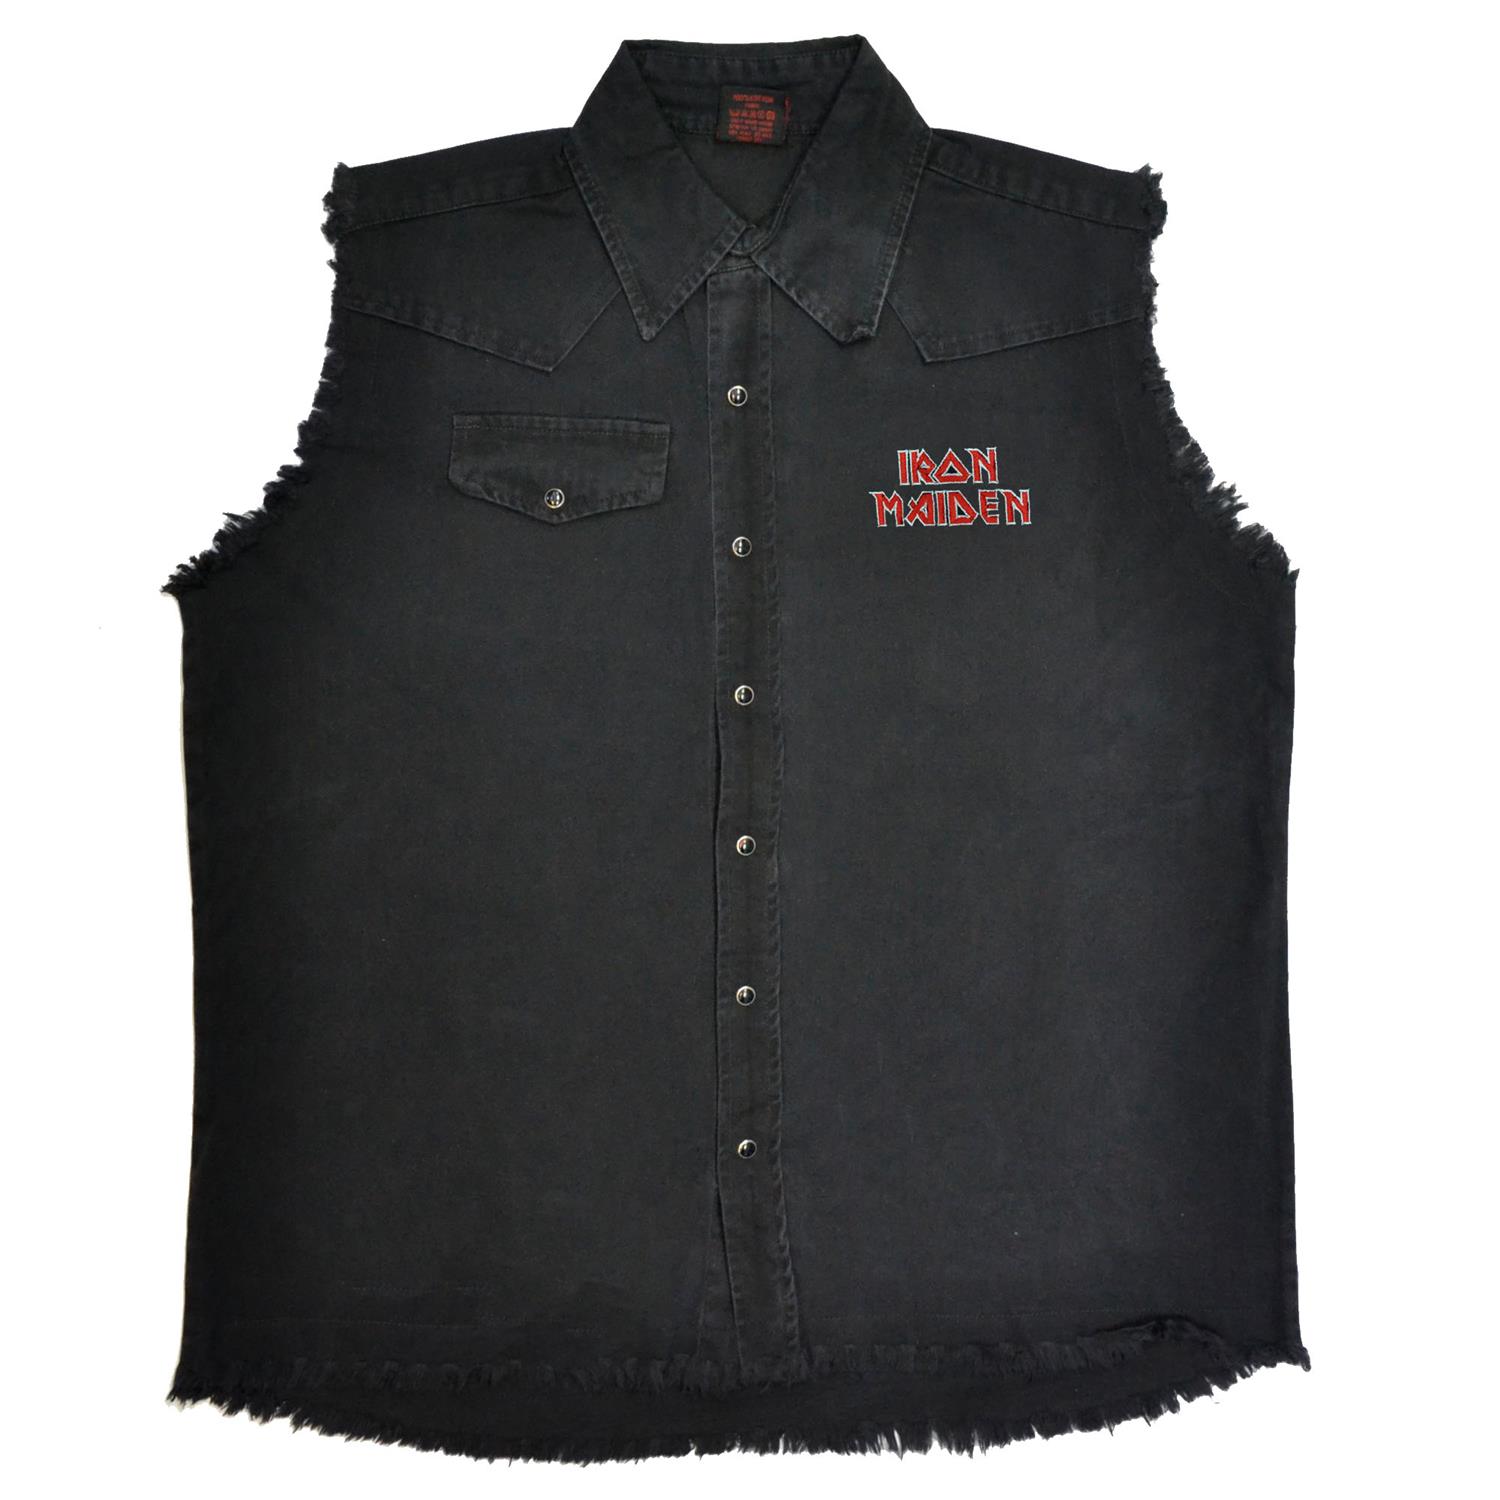 Iron Maiden (Import) Vest